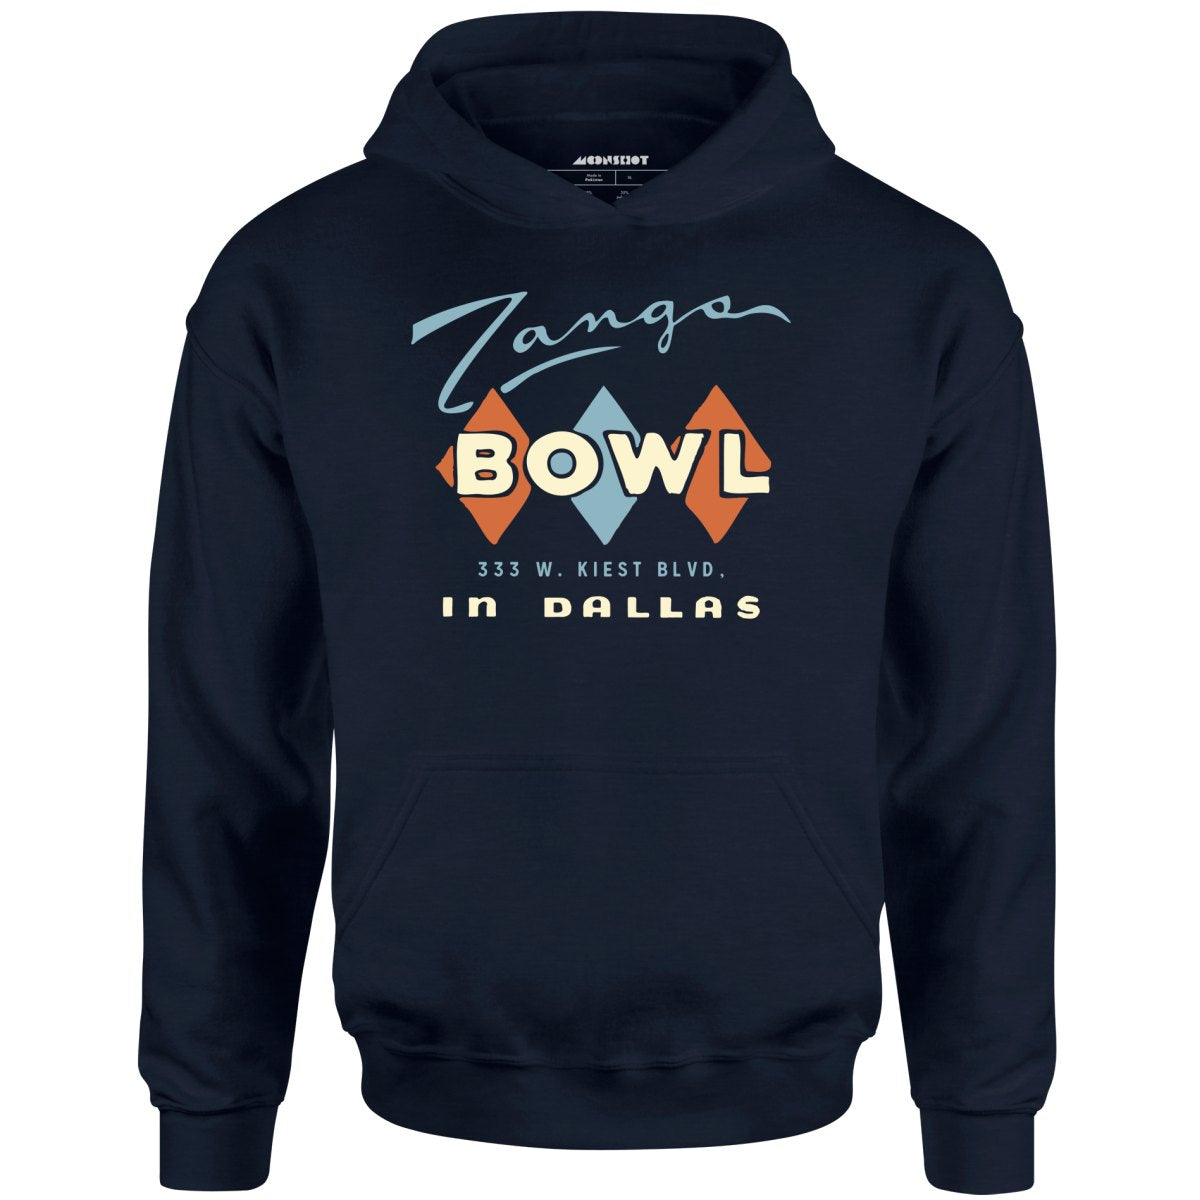 Zangs Bowl - Dallas, TX - Vintage Bowling Alley - Unisex Hoodie